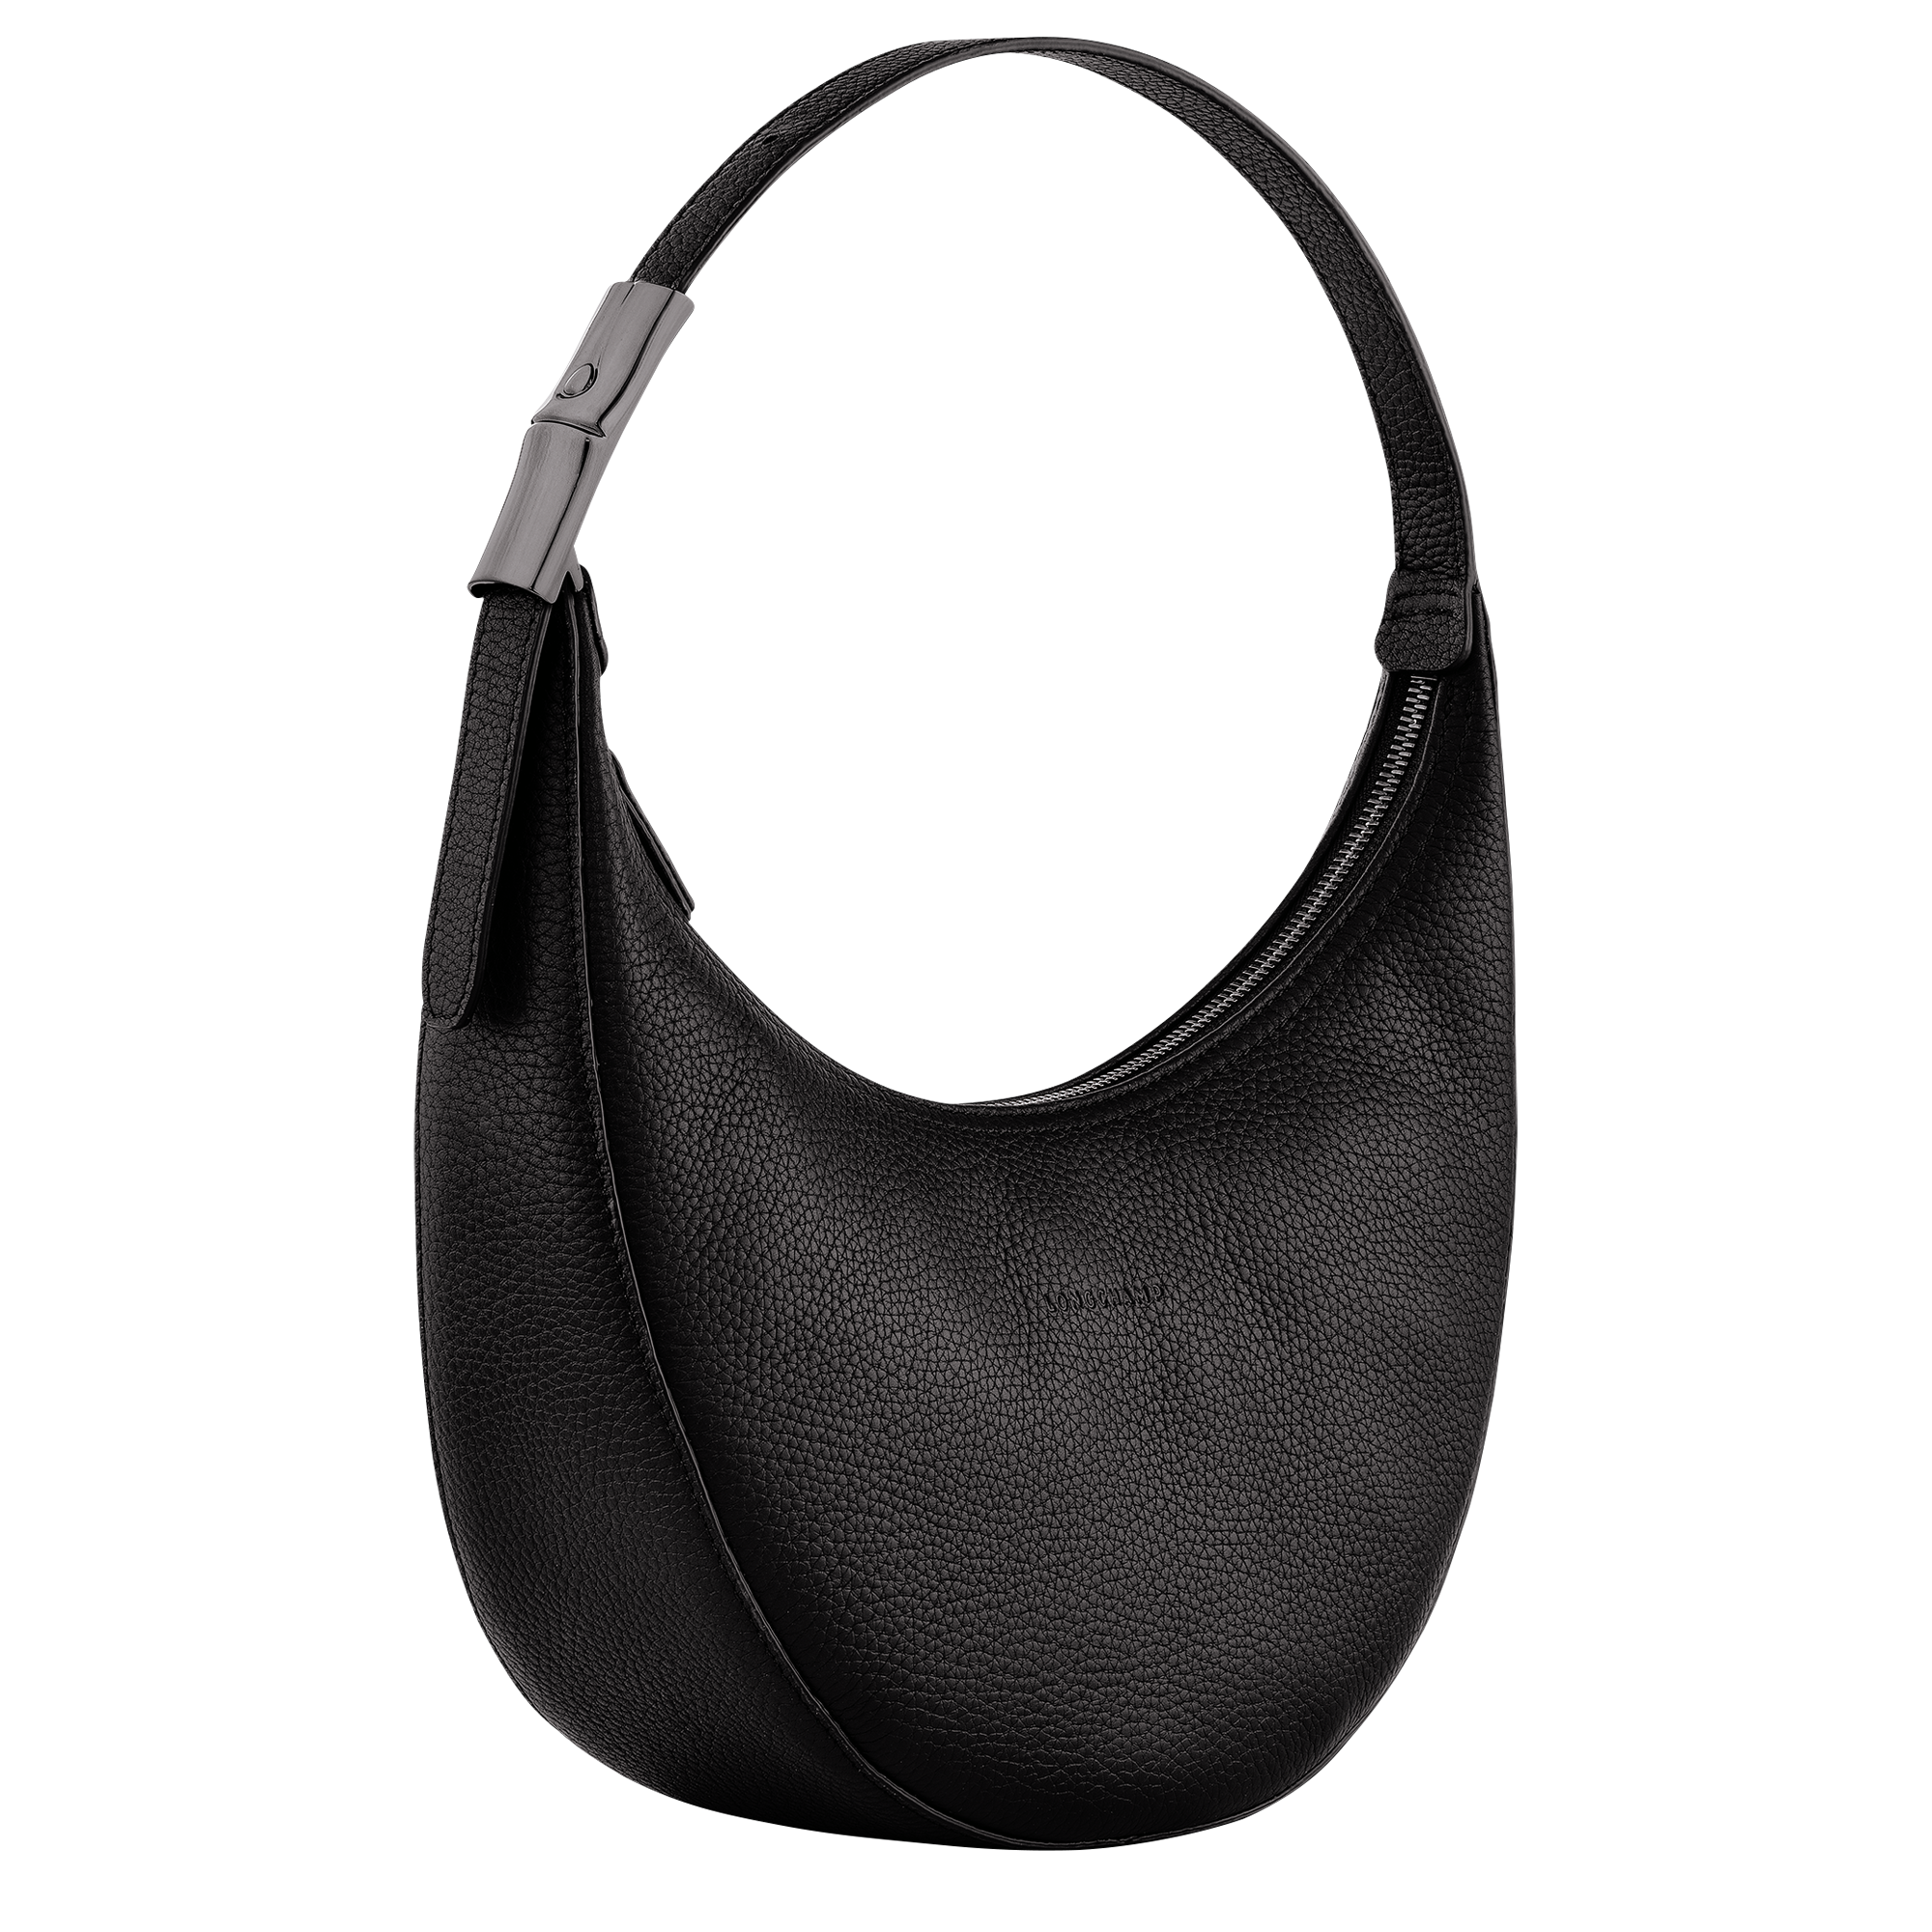 Roseau Essential Hobo bag M, Black